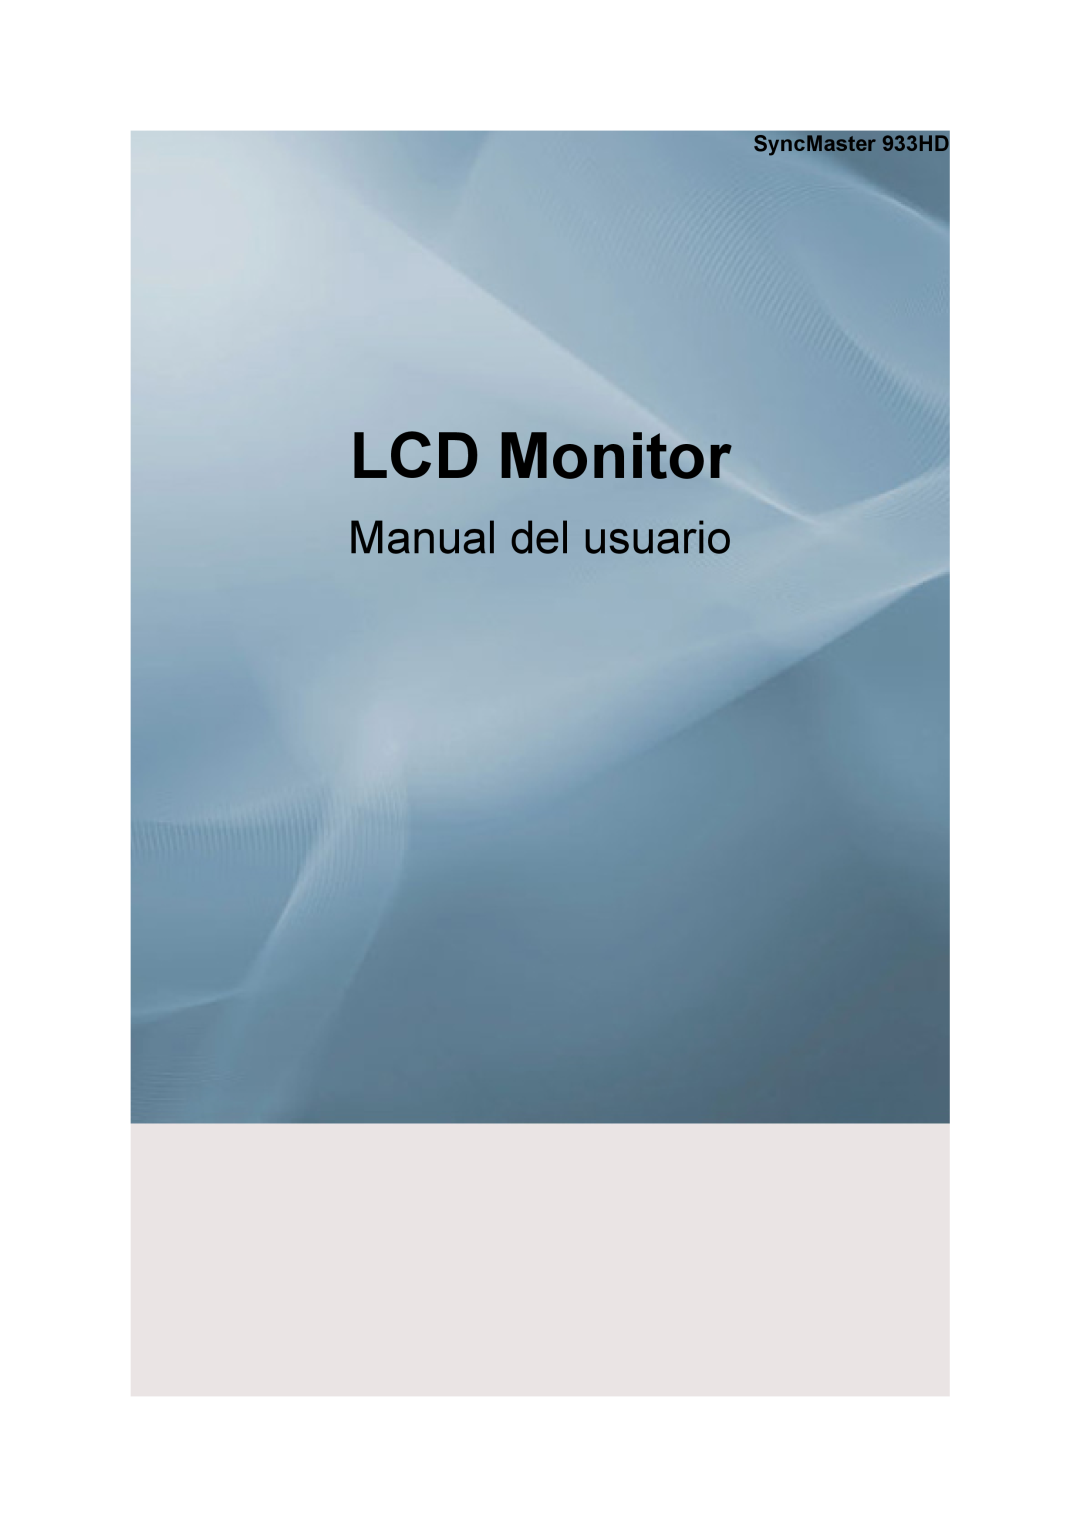 Samsung LS19CFEKF/EN, LS19CFVKF/EN, LS19CFVKH/EN manual SyncMaster 933HD, LCD Monitor, Manual del usuario 